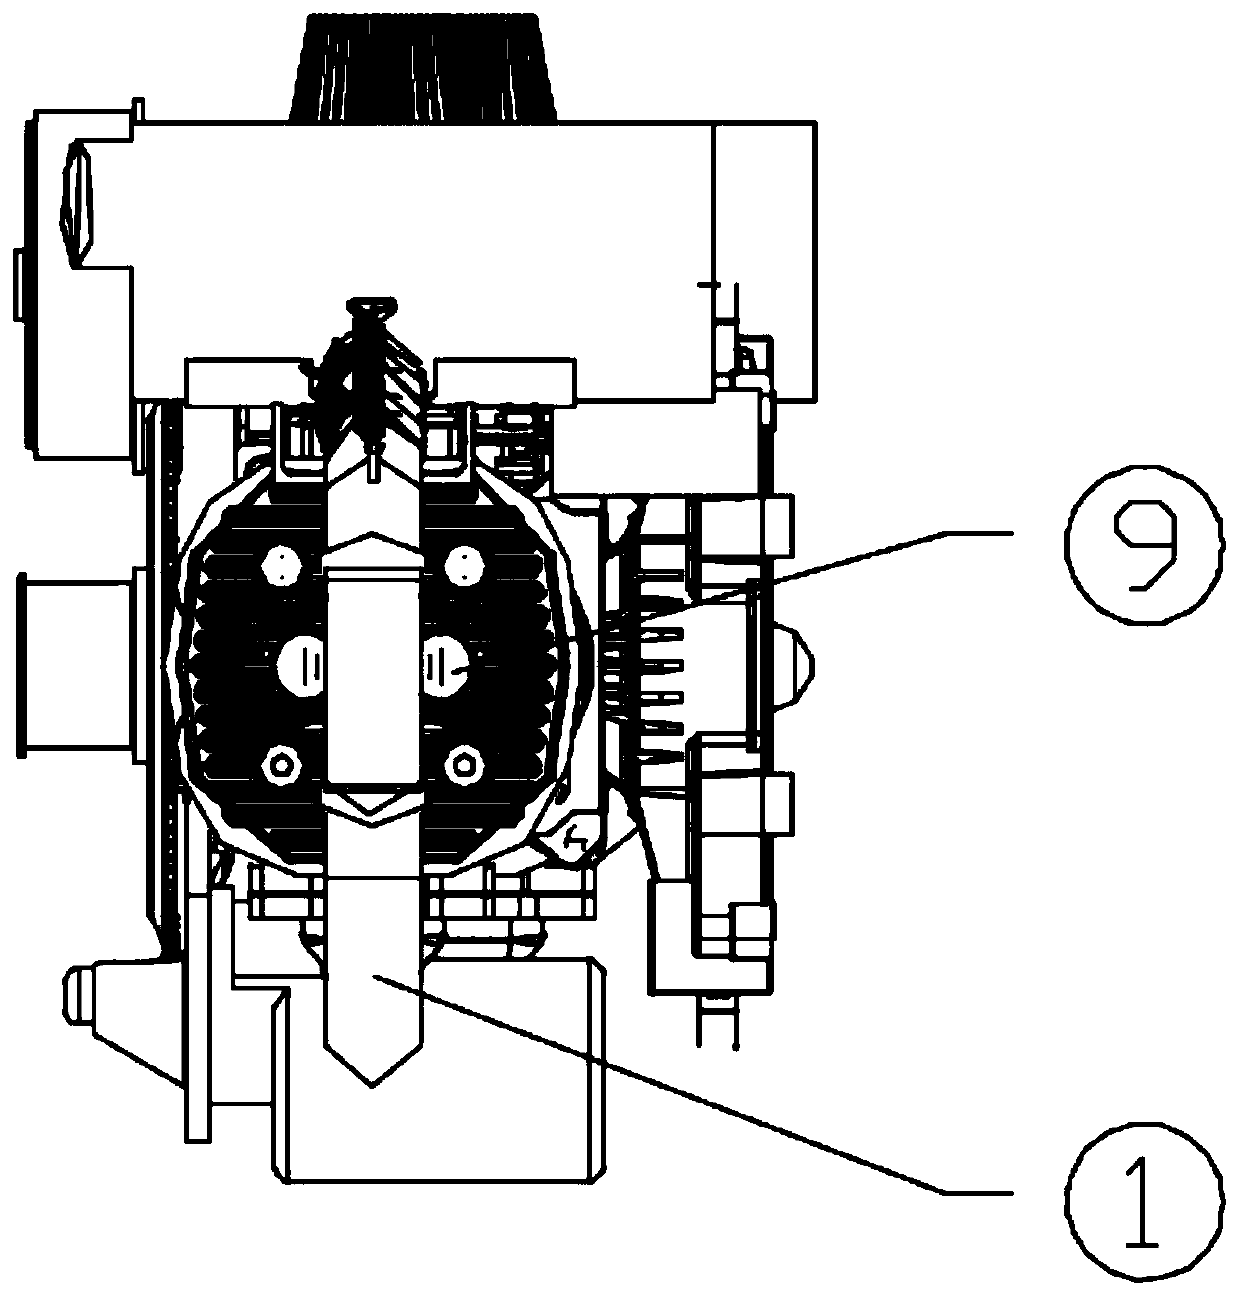 Light horizontal opposed engine